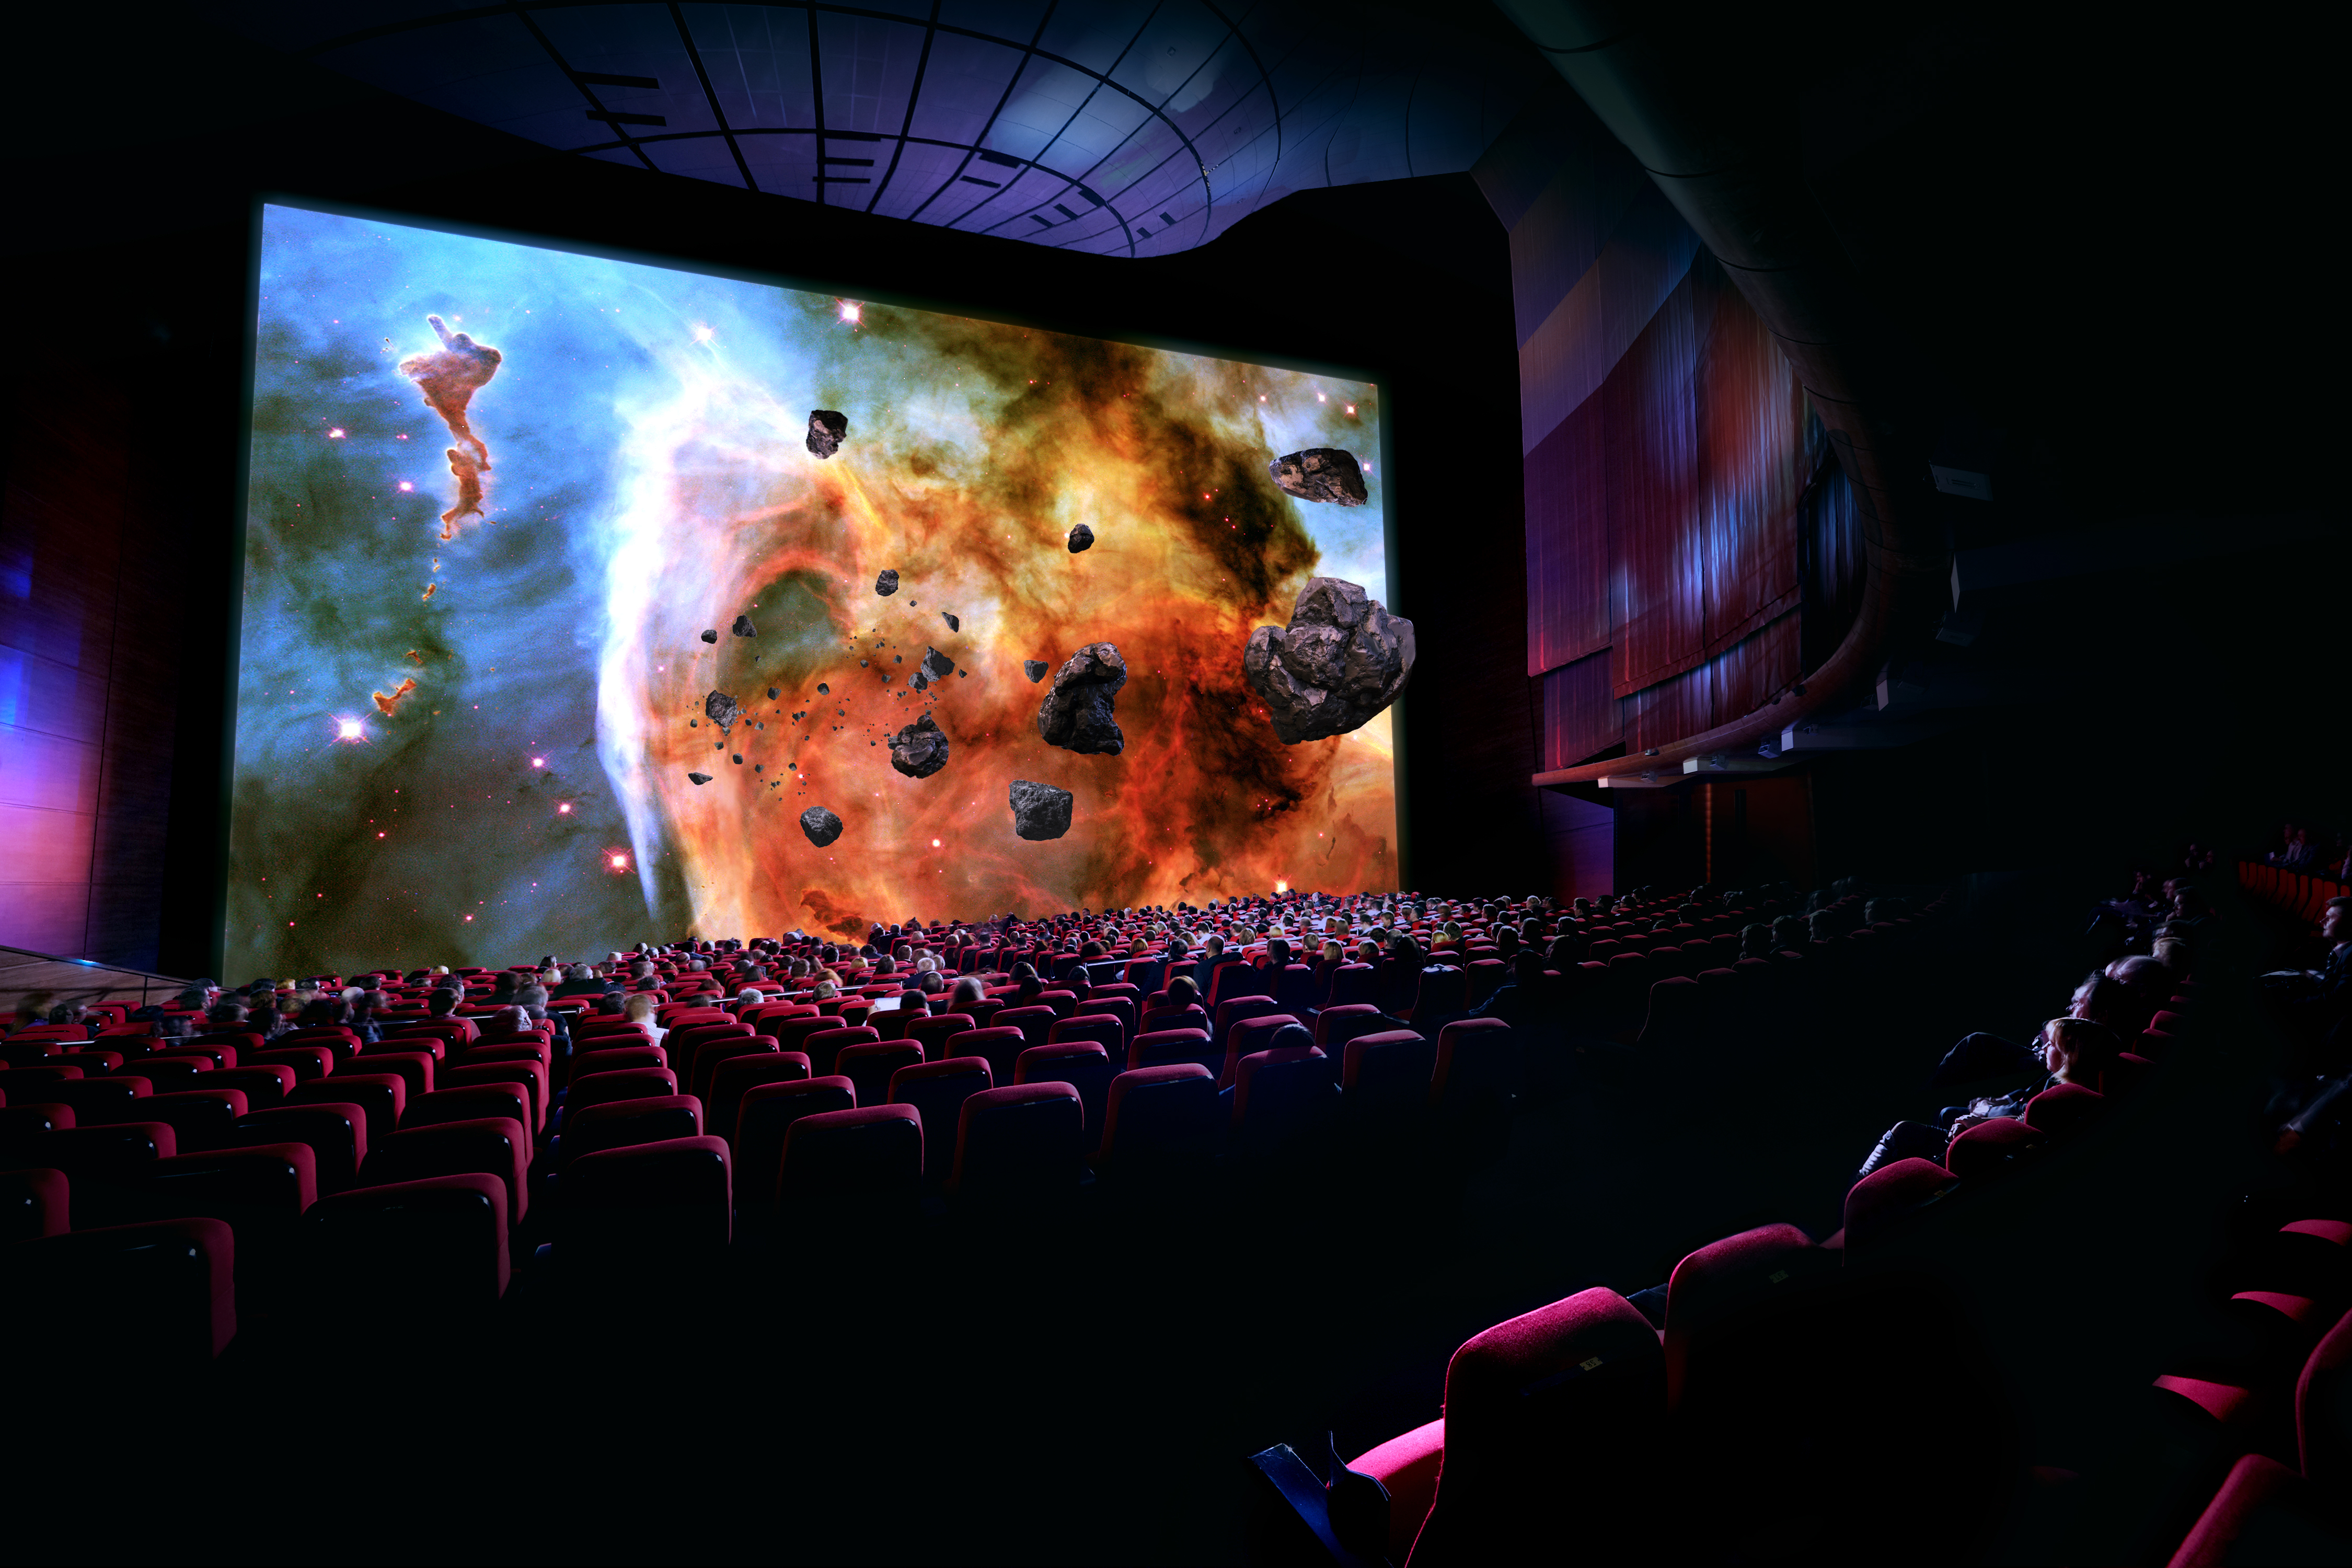 Лед 3 кинотеатр парк. IMAX 5d. 3д кинотеатр. Экран кинотеатра. Большой экран в кинотеатре.